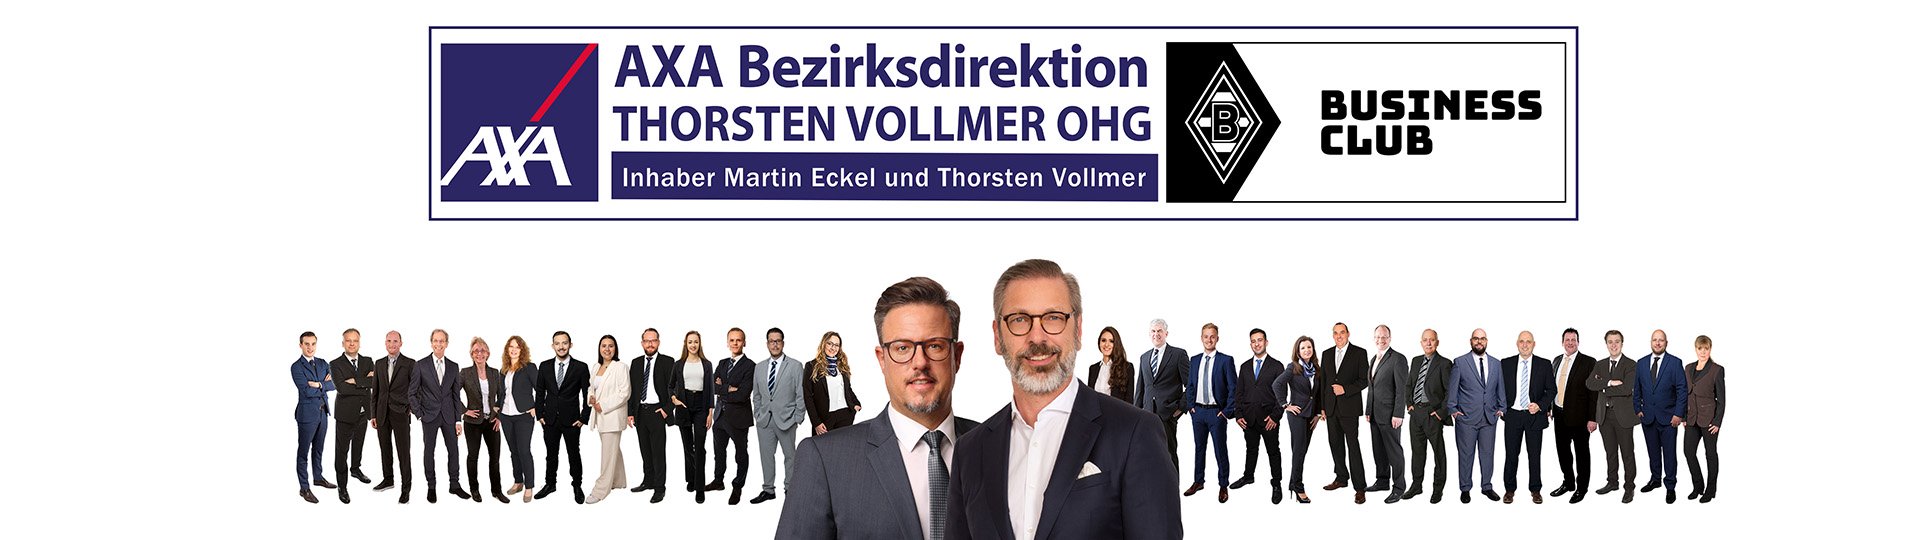 AXA Mönchengladbach Thorsten Vollmer OHG 